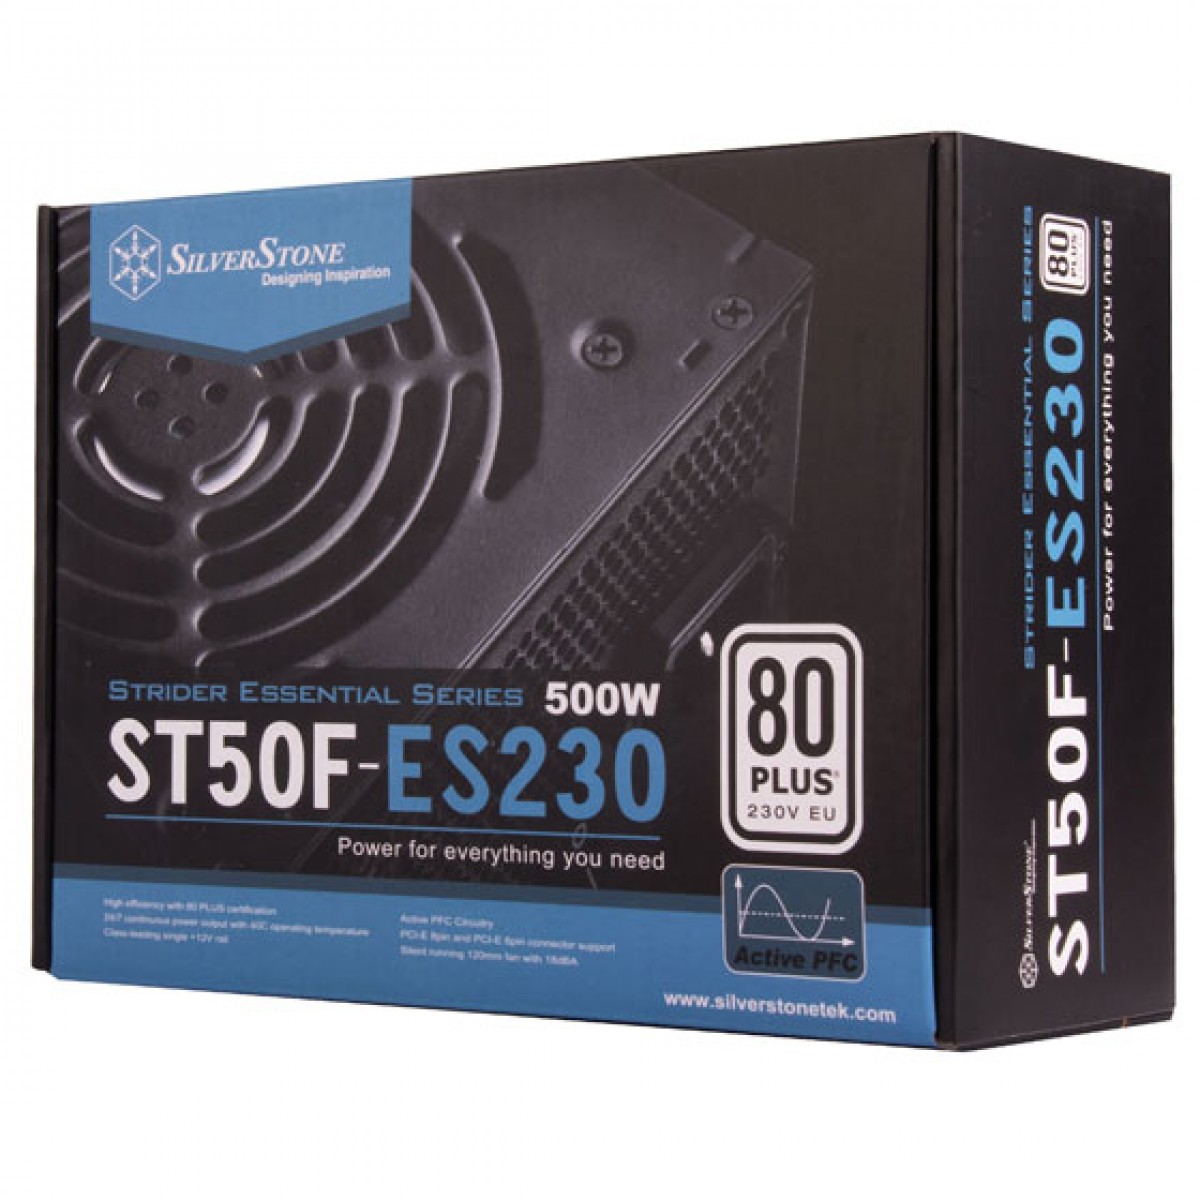 Fonte SilverStone SST-ST50F-ES230, 500W, 80 Plus, PFC Ativo, SST-ST50F-ES230 (APENAS 220V) - Open Box